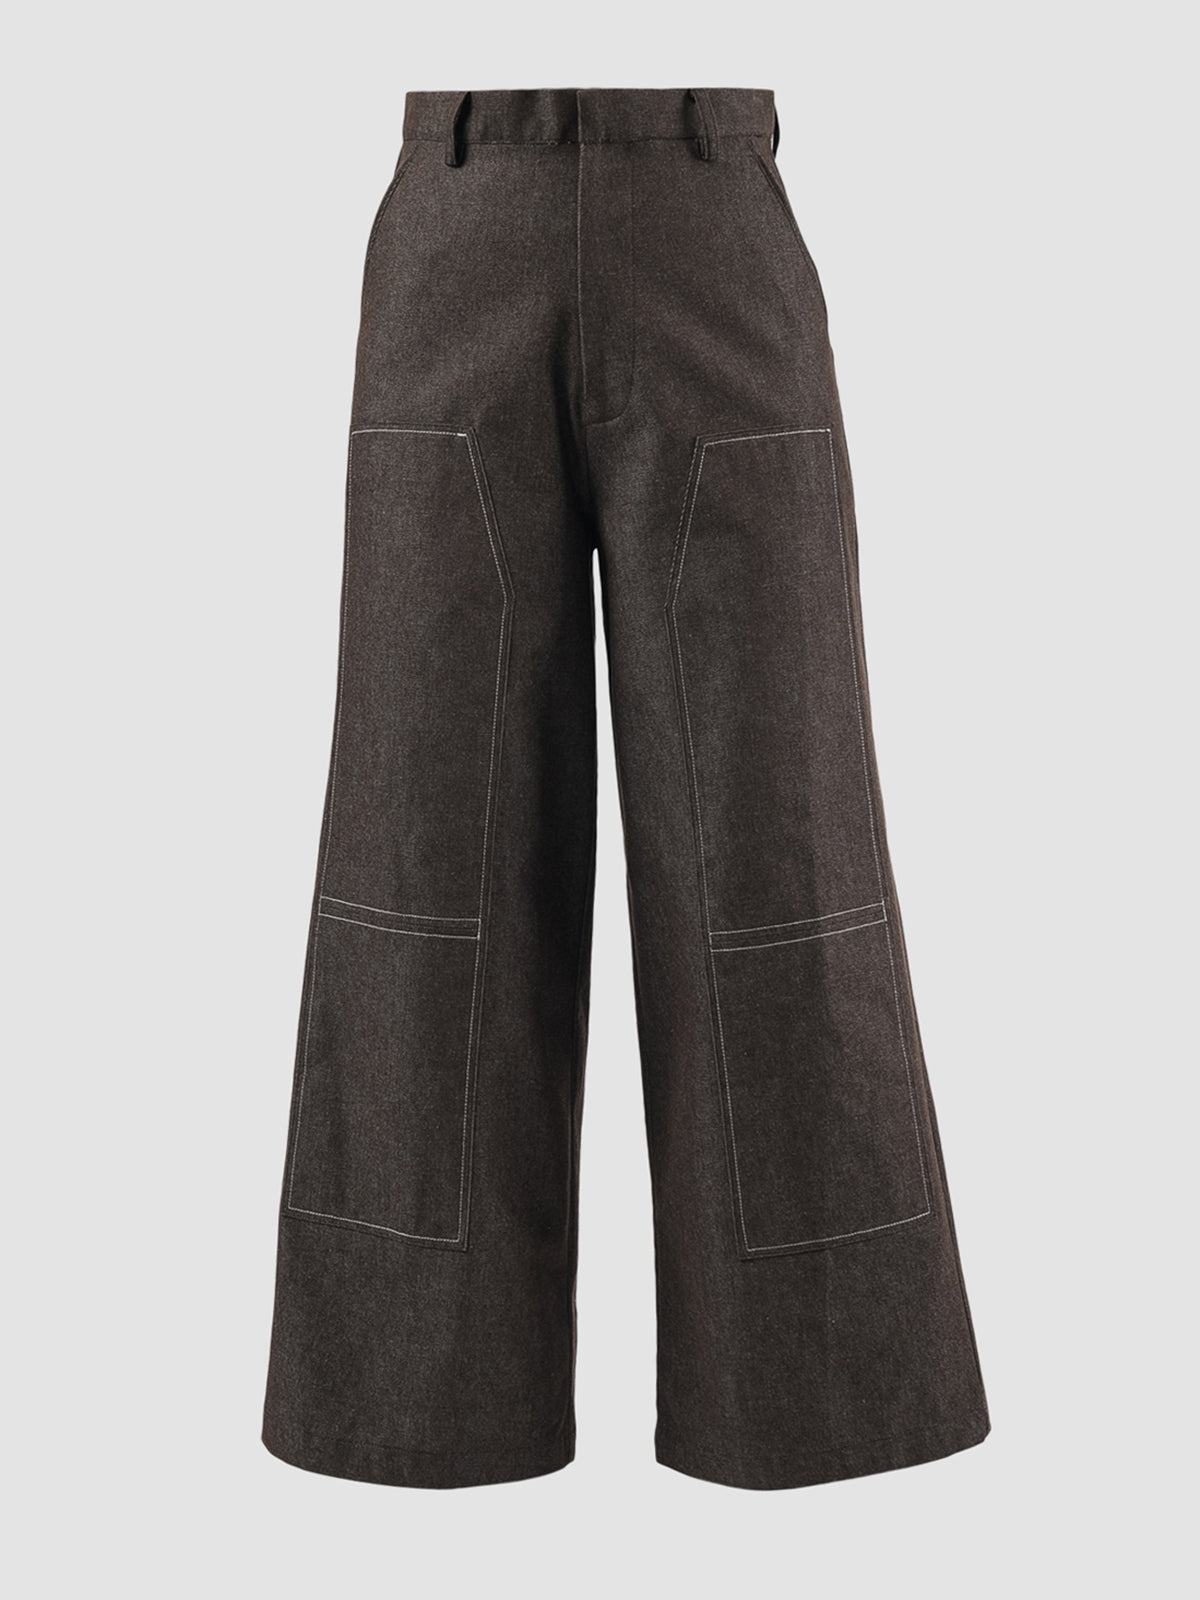 Aster brown wide-legged pants